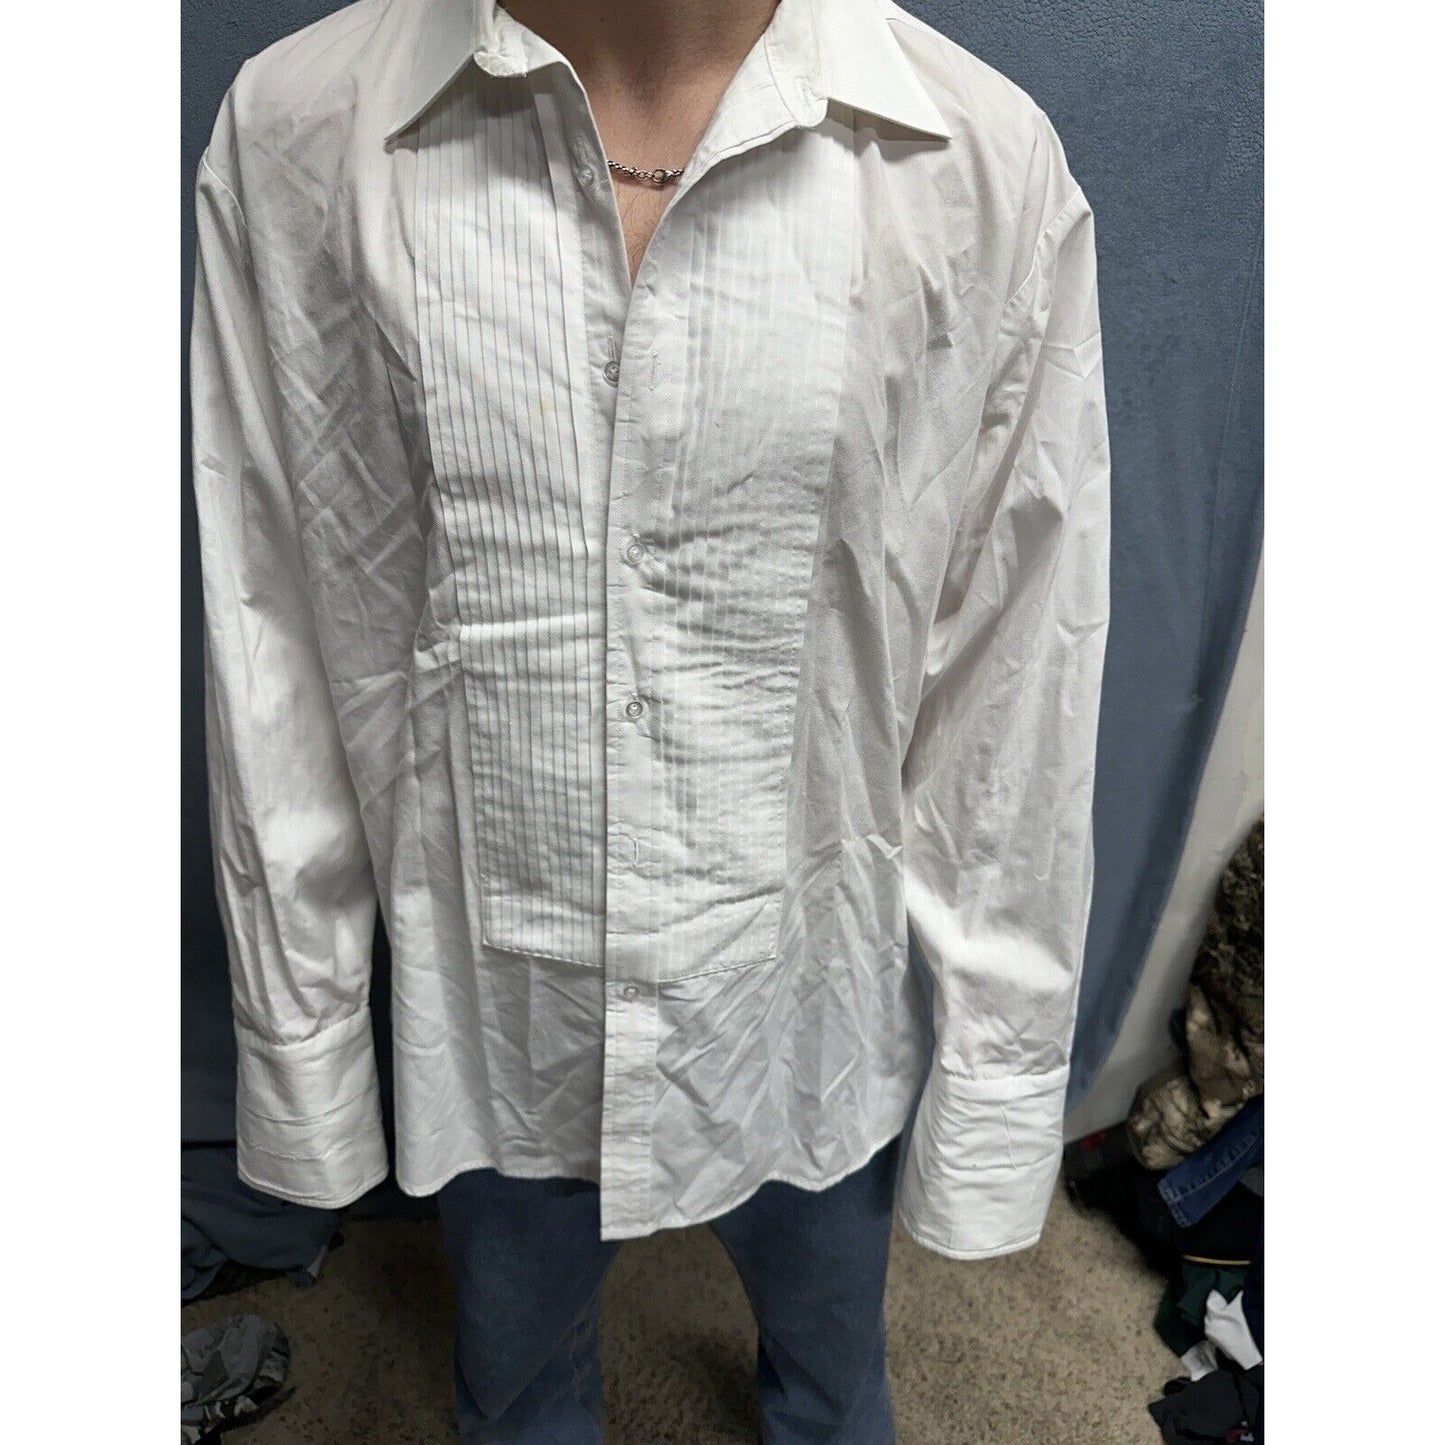 Air Force White Mess Dress Aetna Shirt 17 / 35 Long Sleeve Uniform